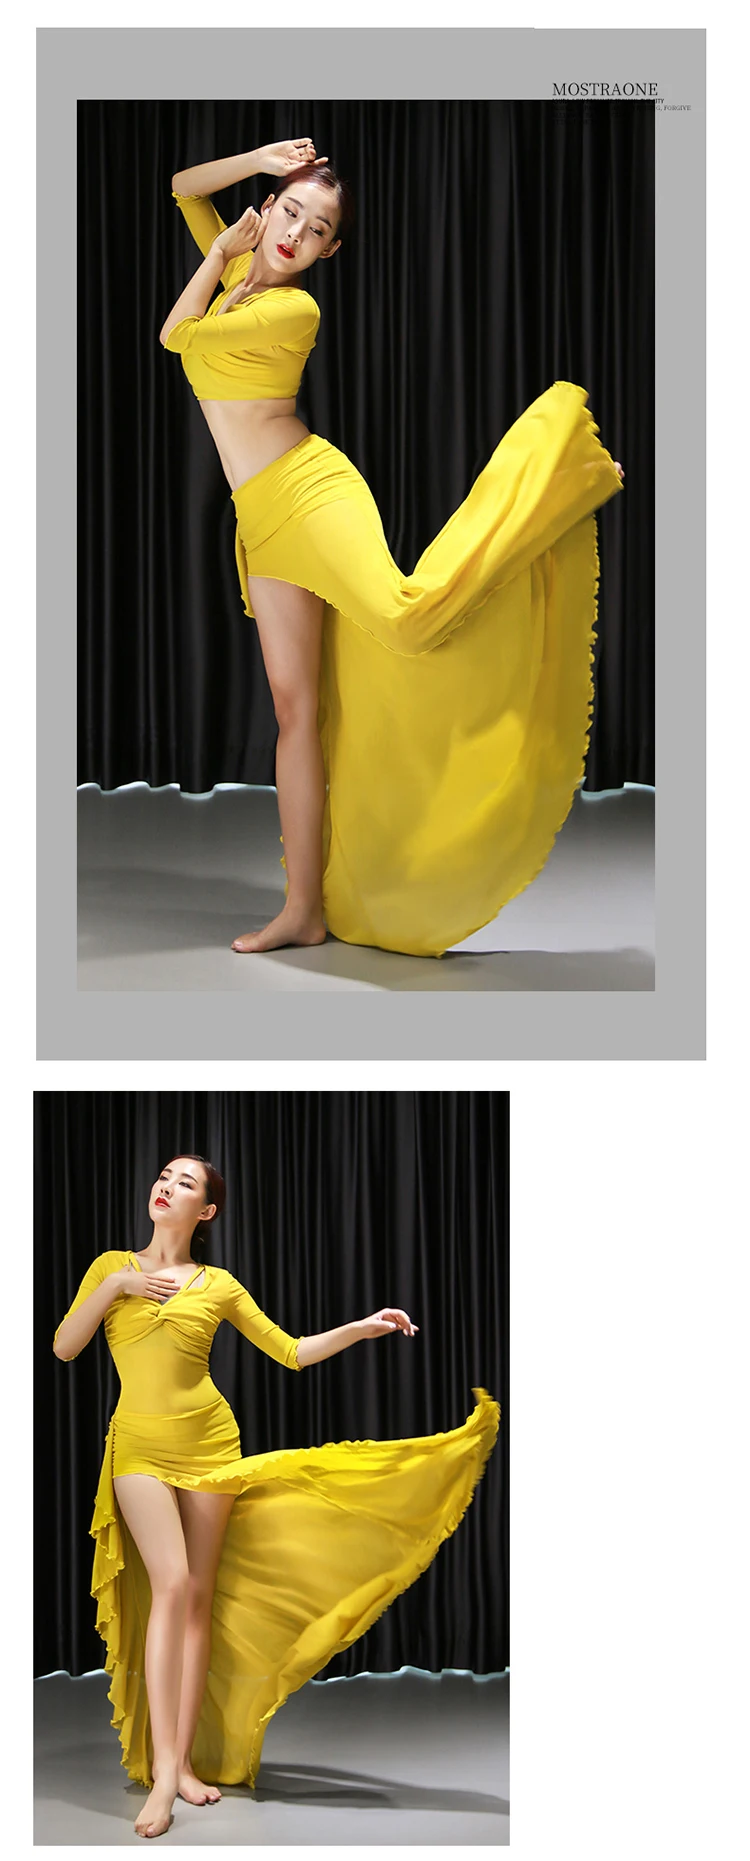 Женский набор костюма для танца живота 2 шт. Топ Бюстгальтер длинная юбка осенняя одежда для танца живота Профессиональный костюм для танцев